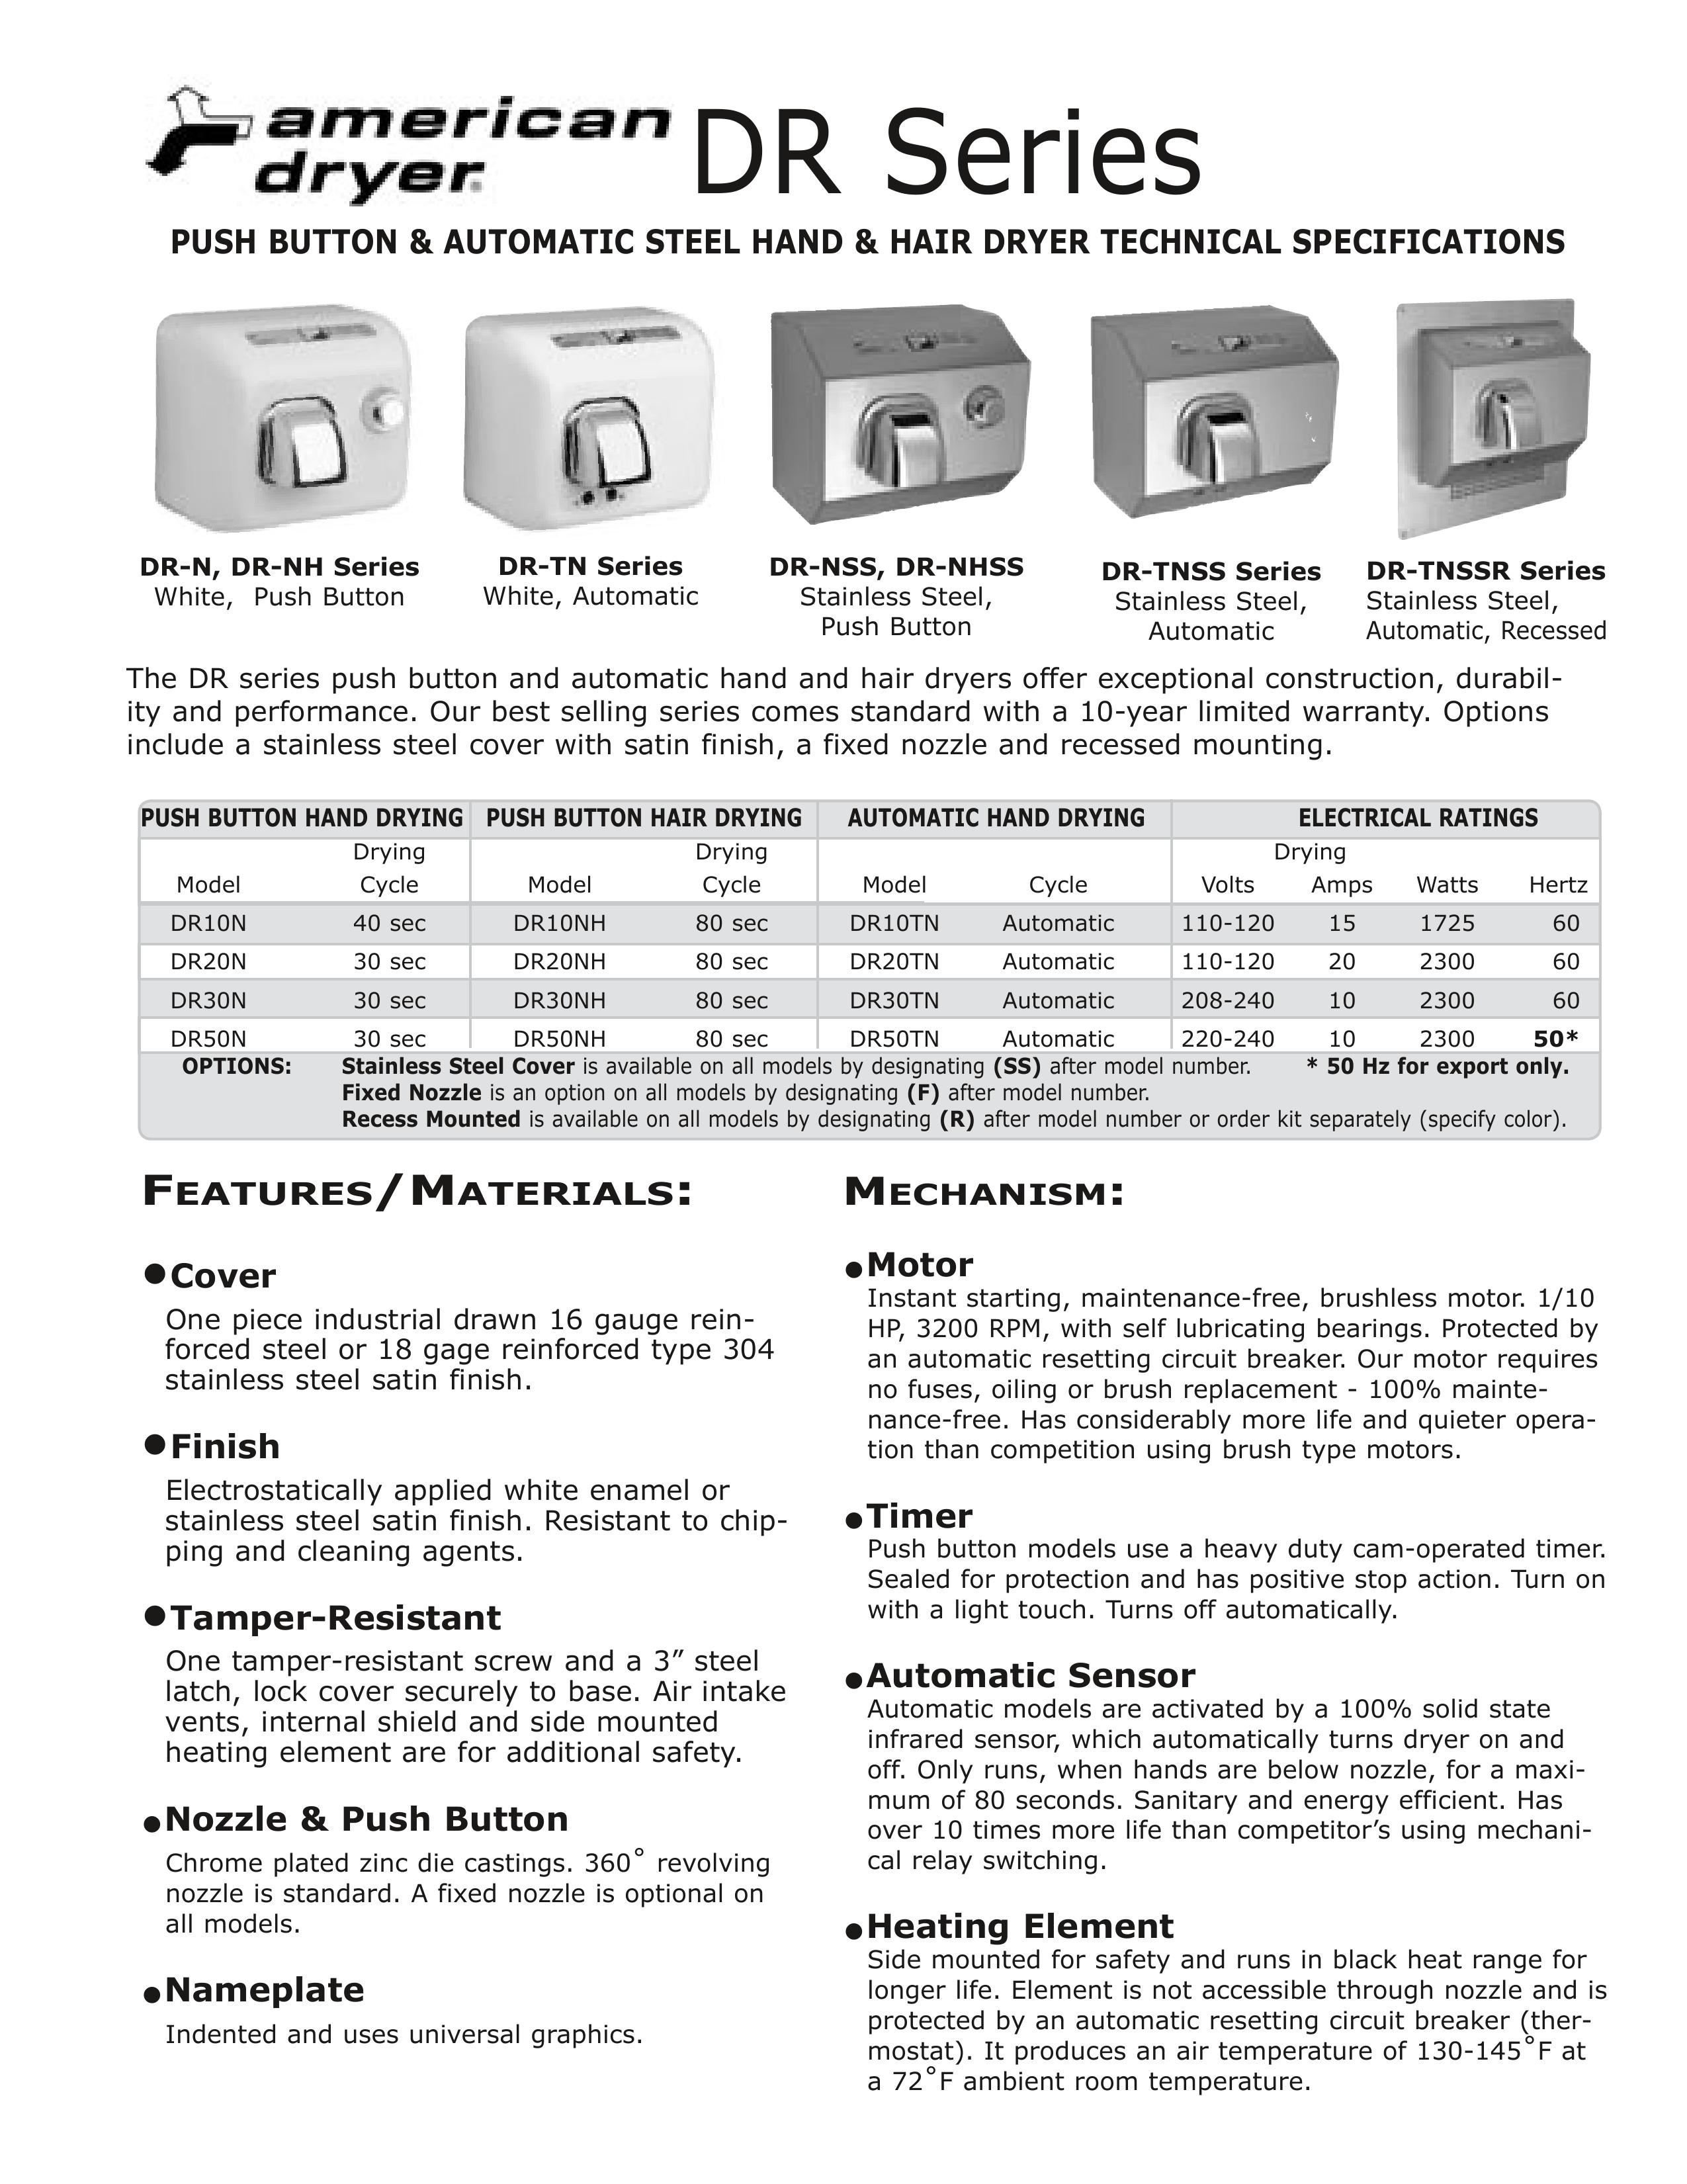 American Dryer DR-NH Hair Dryer User Manual